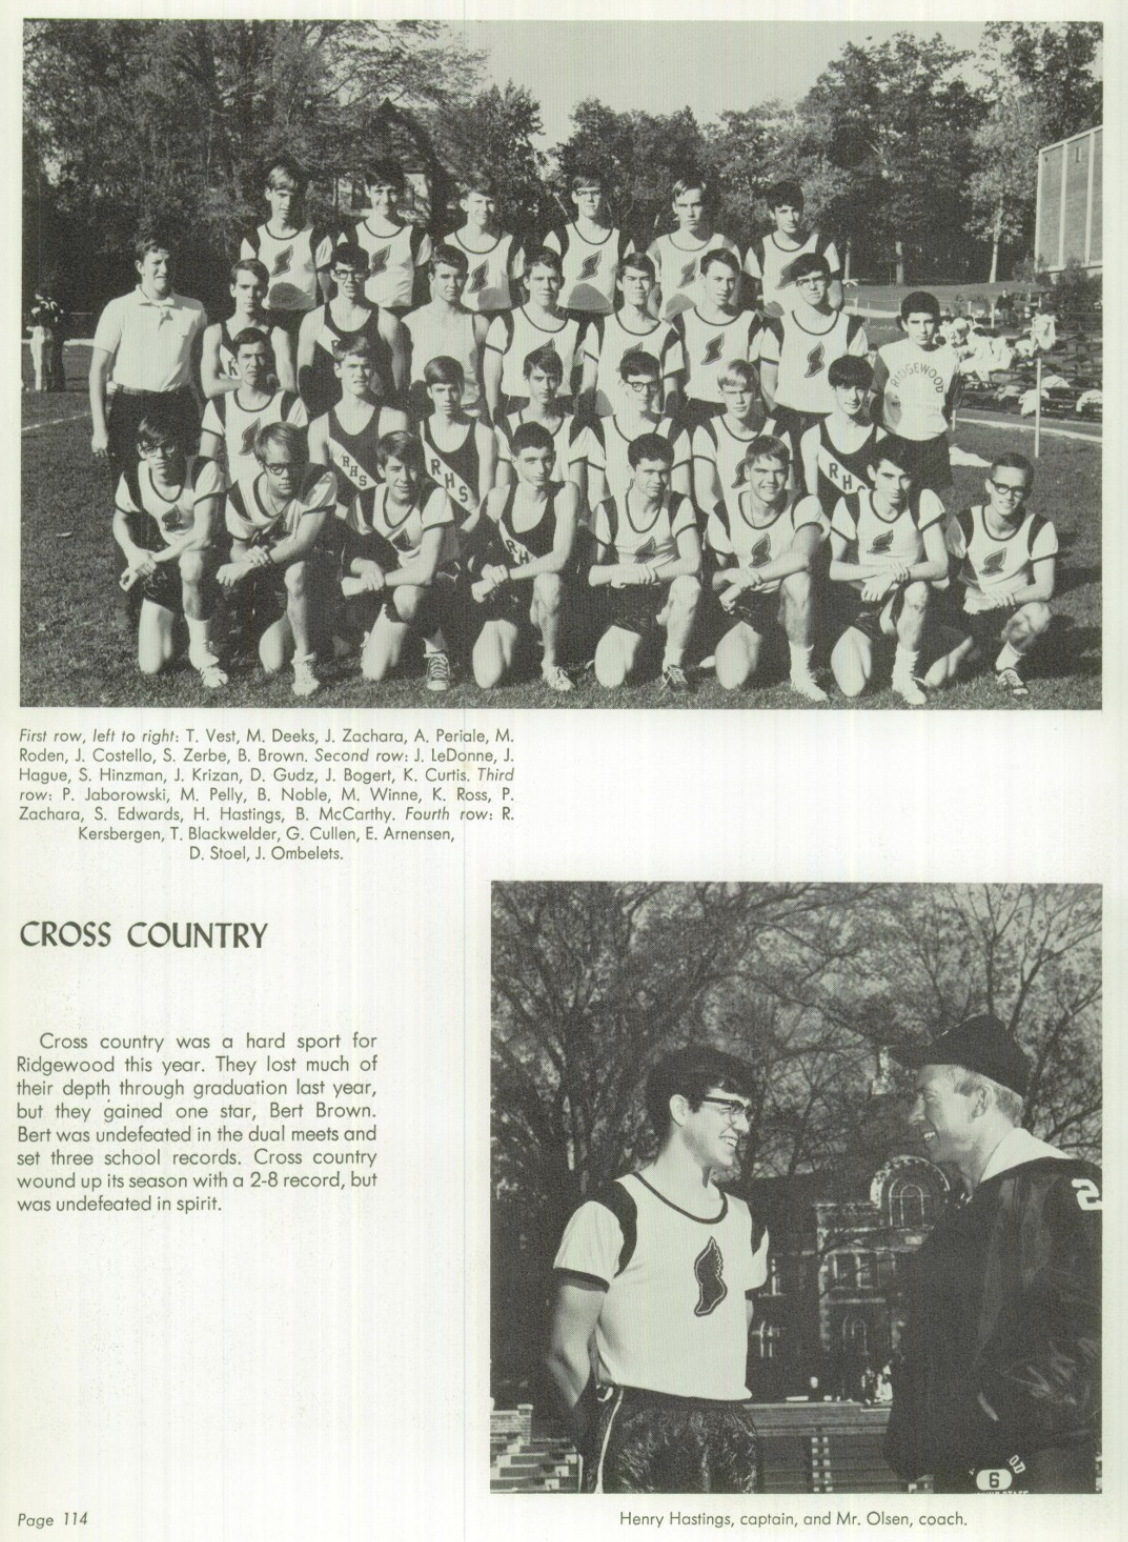 1968 Boys’ Cross Country Team